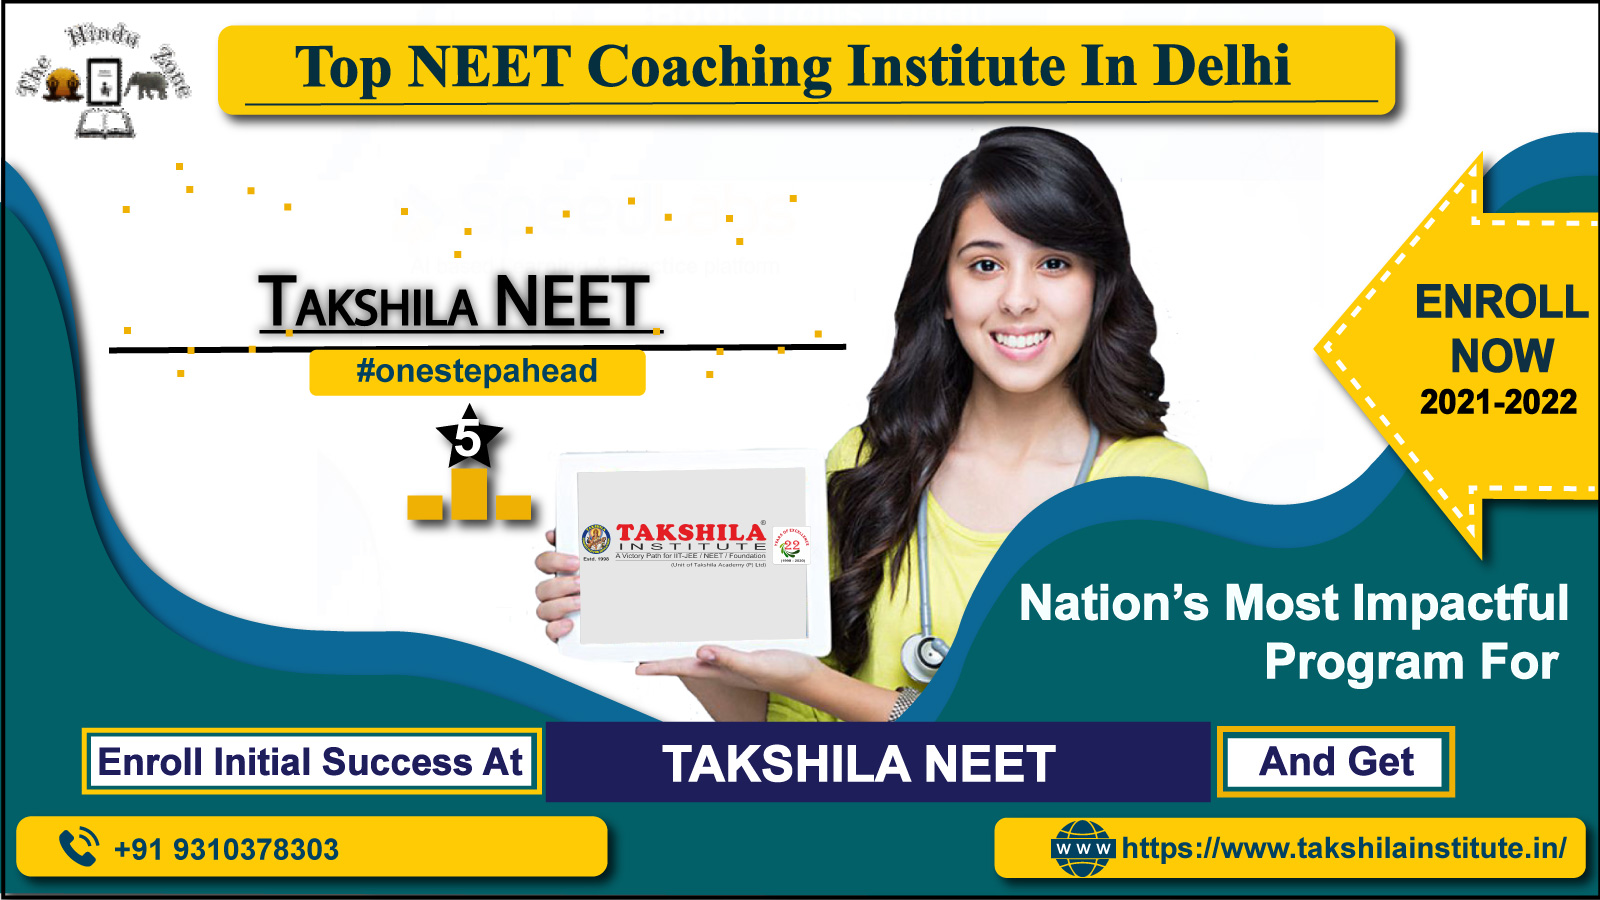 Takshila NEET Coaching Institute In Delhi